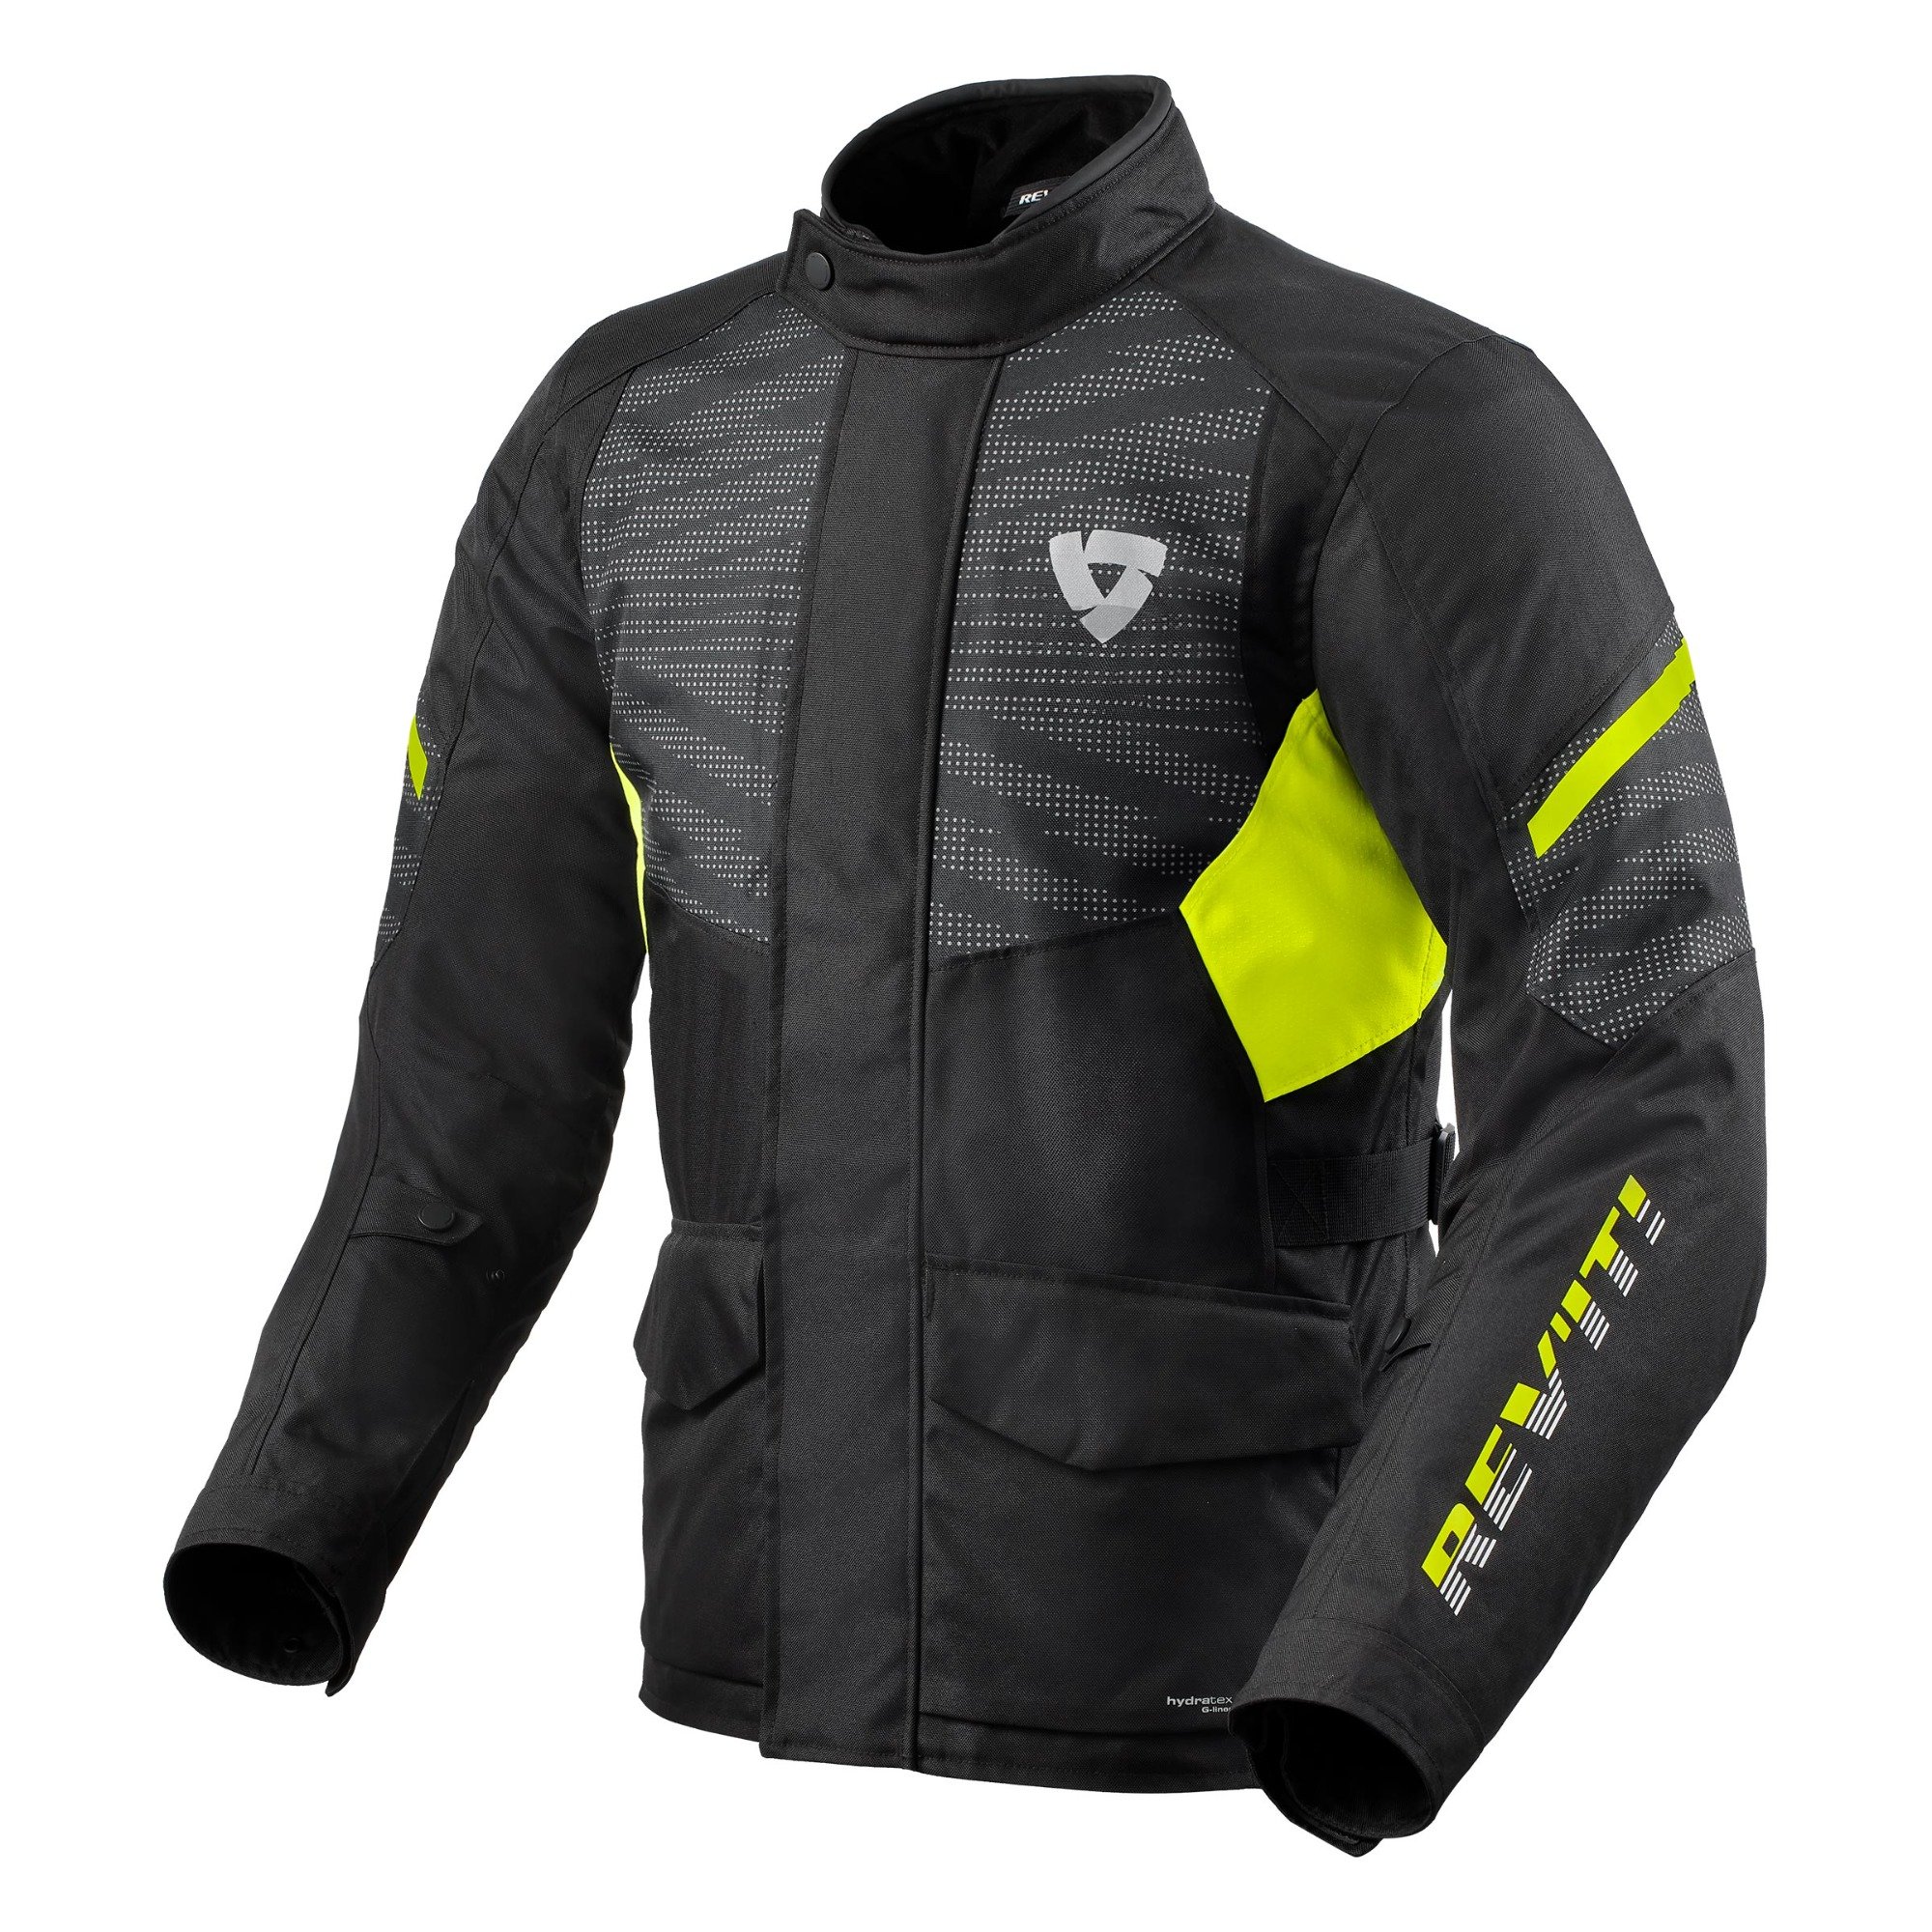 Image of REV'IT! Duke H2O Jacket Black Neon Yellow Talla S